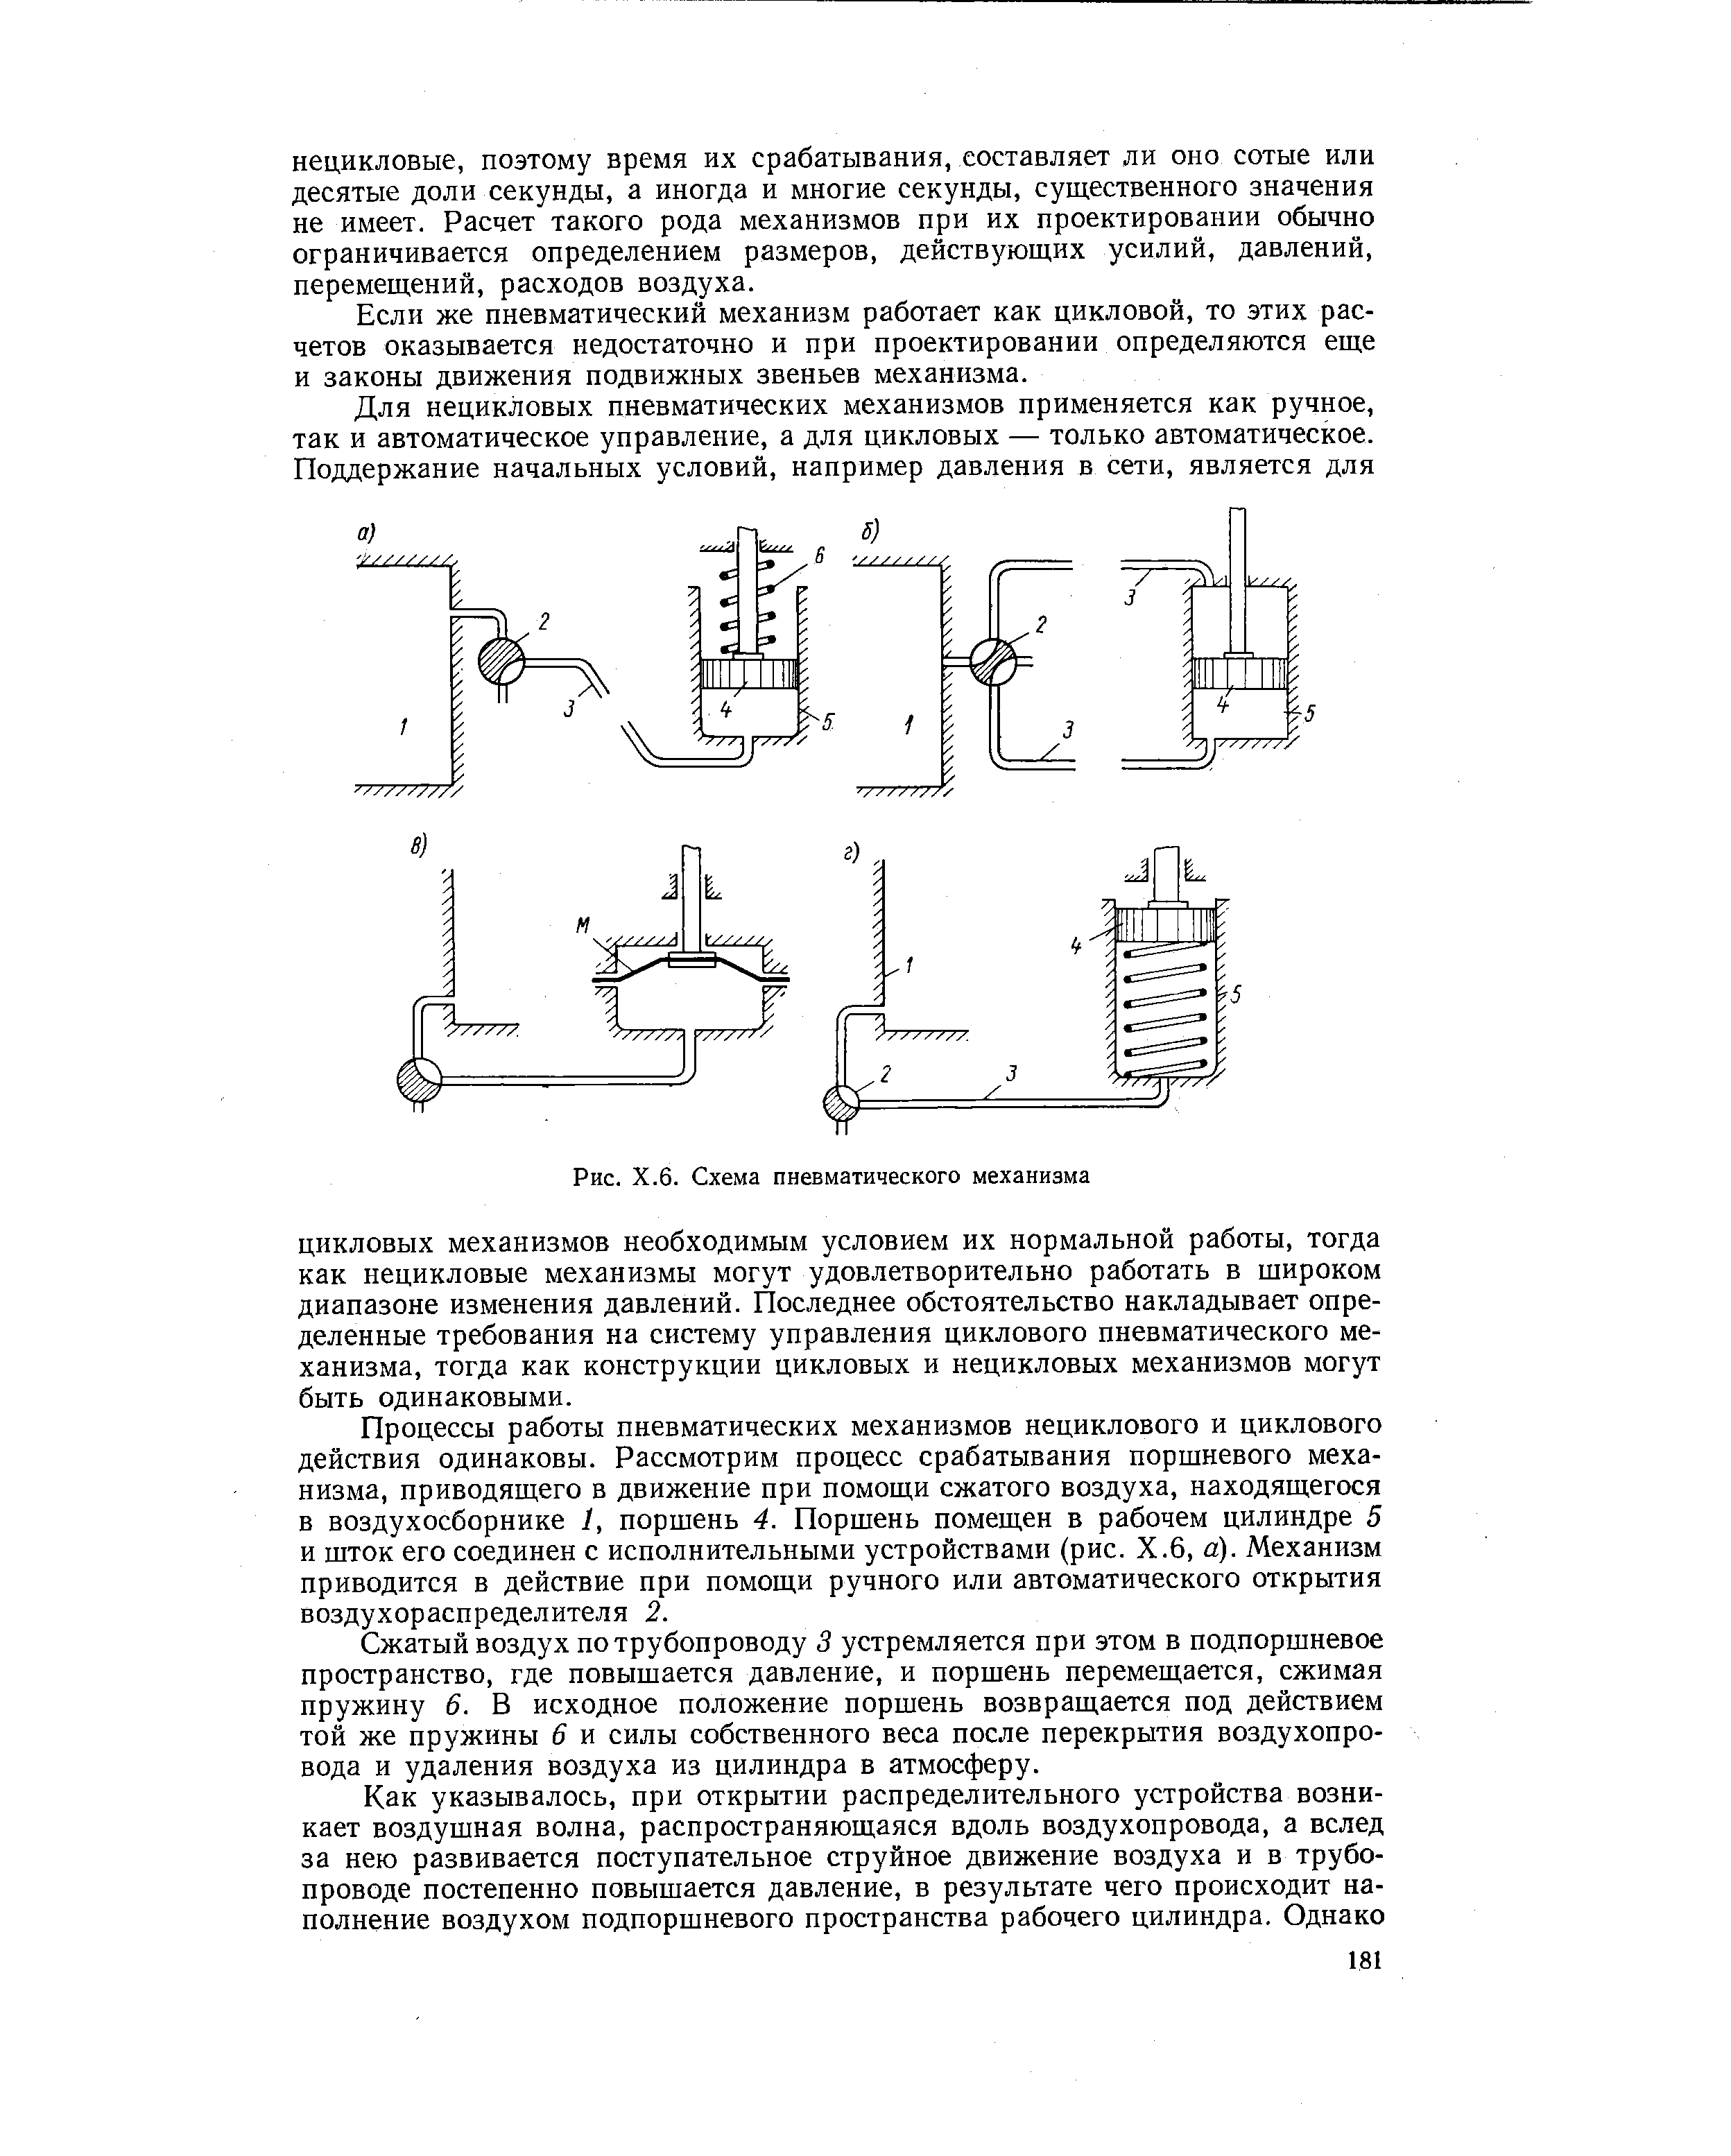 Рис. Х.6. Схема пневматического механизма
